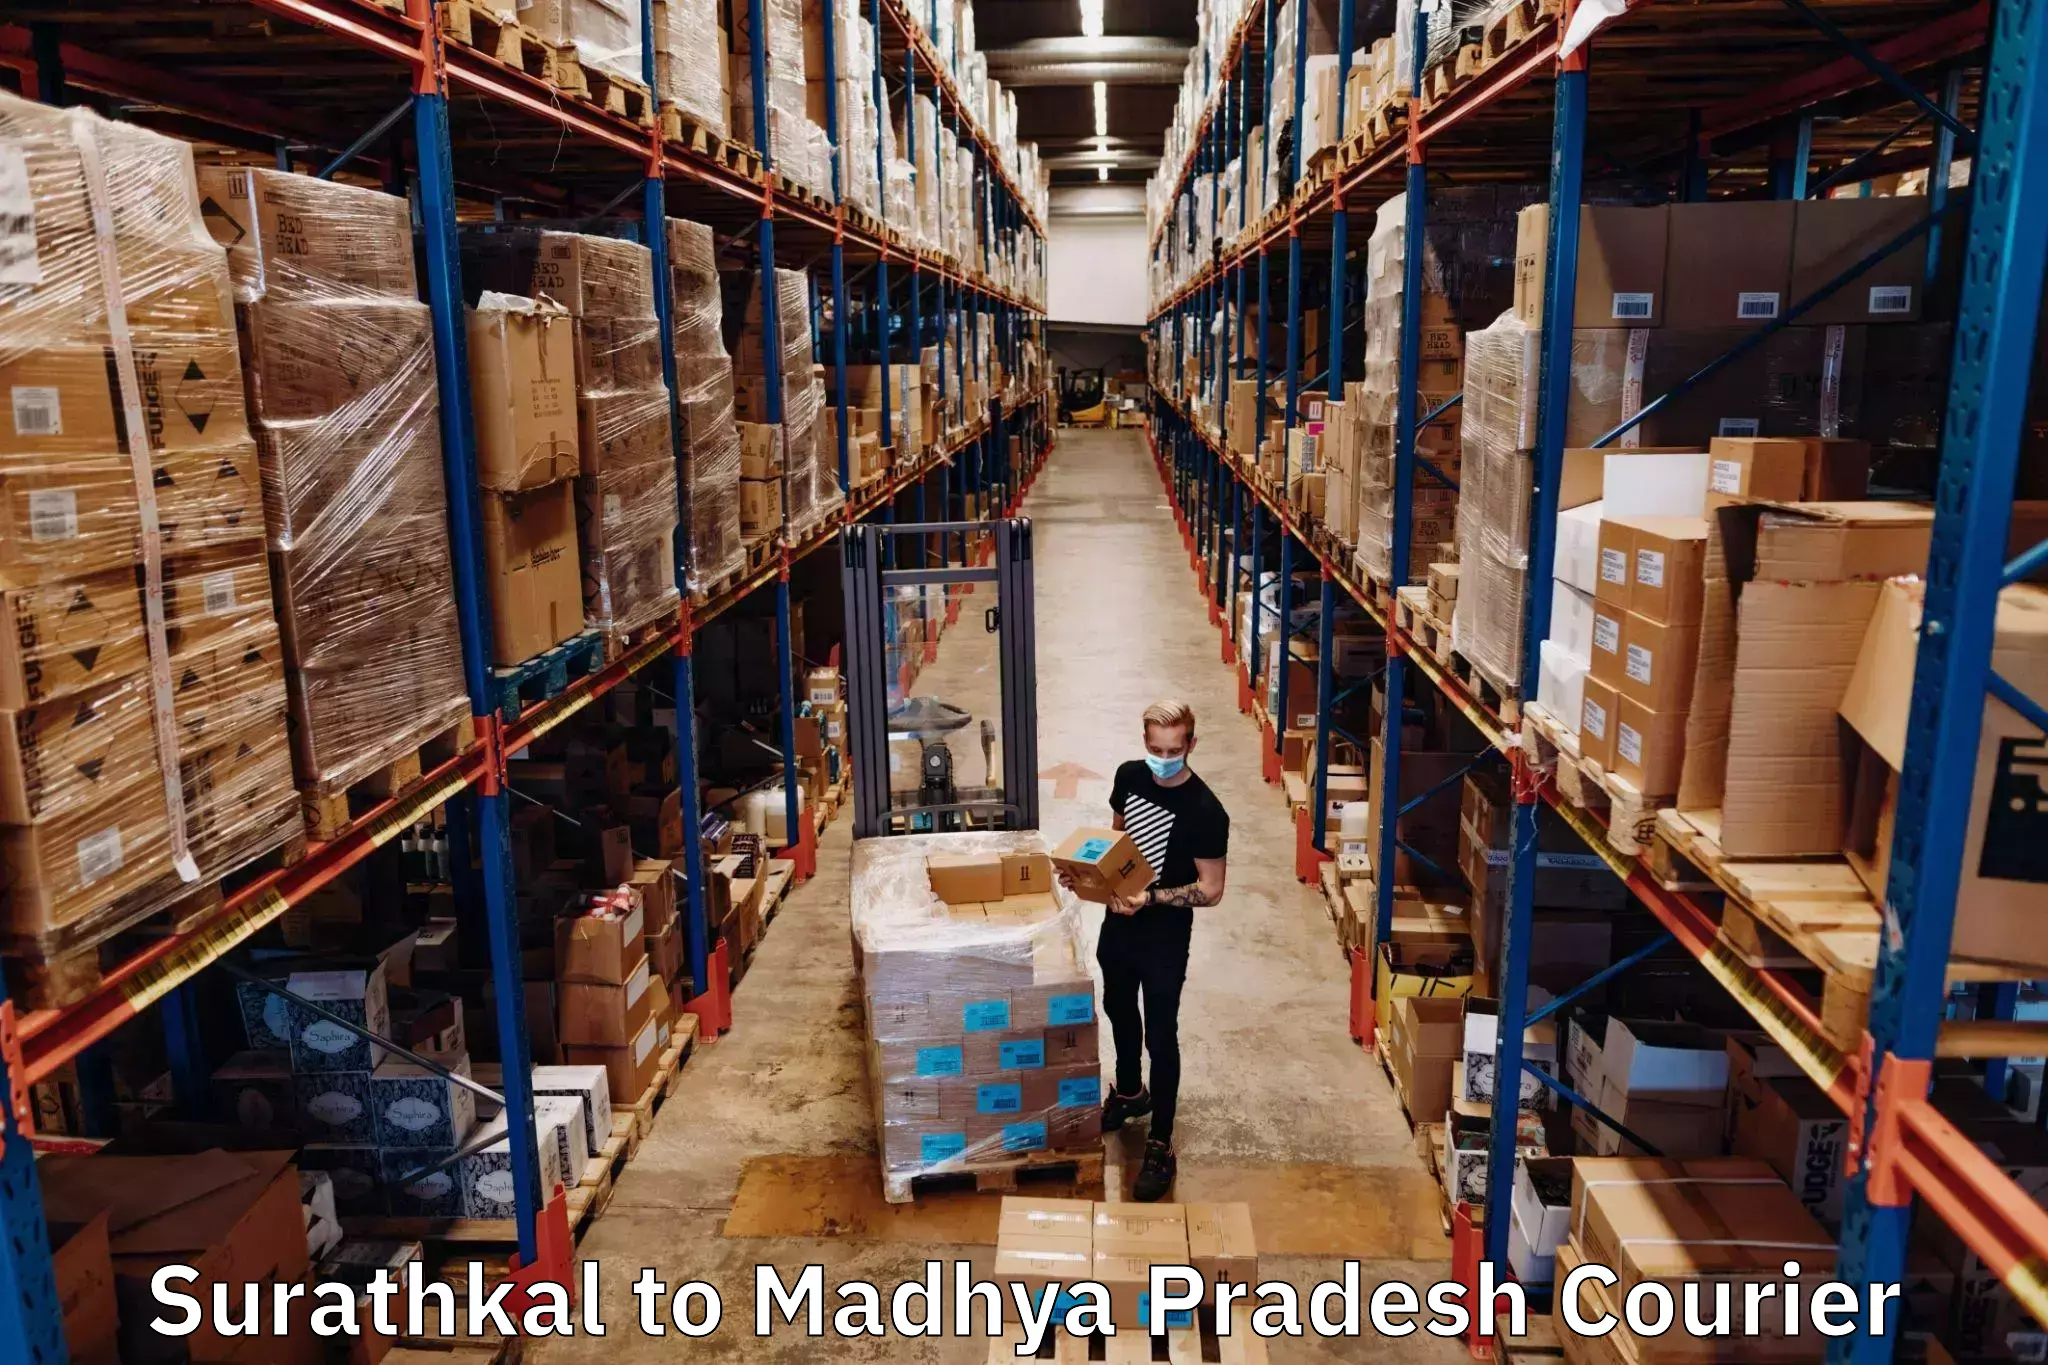 Courier service partnerships Surathkal to Madhya Pradesh